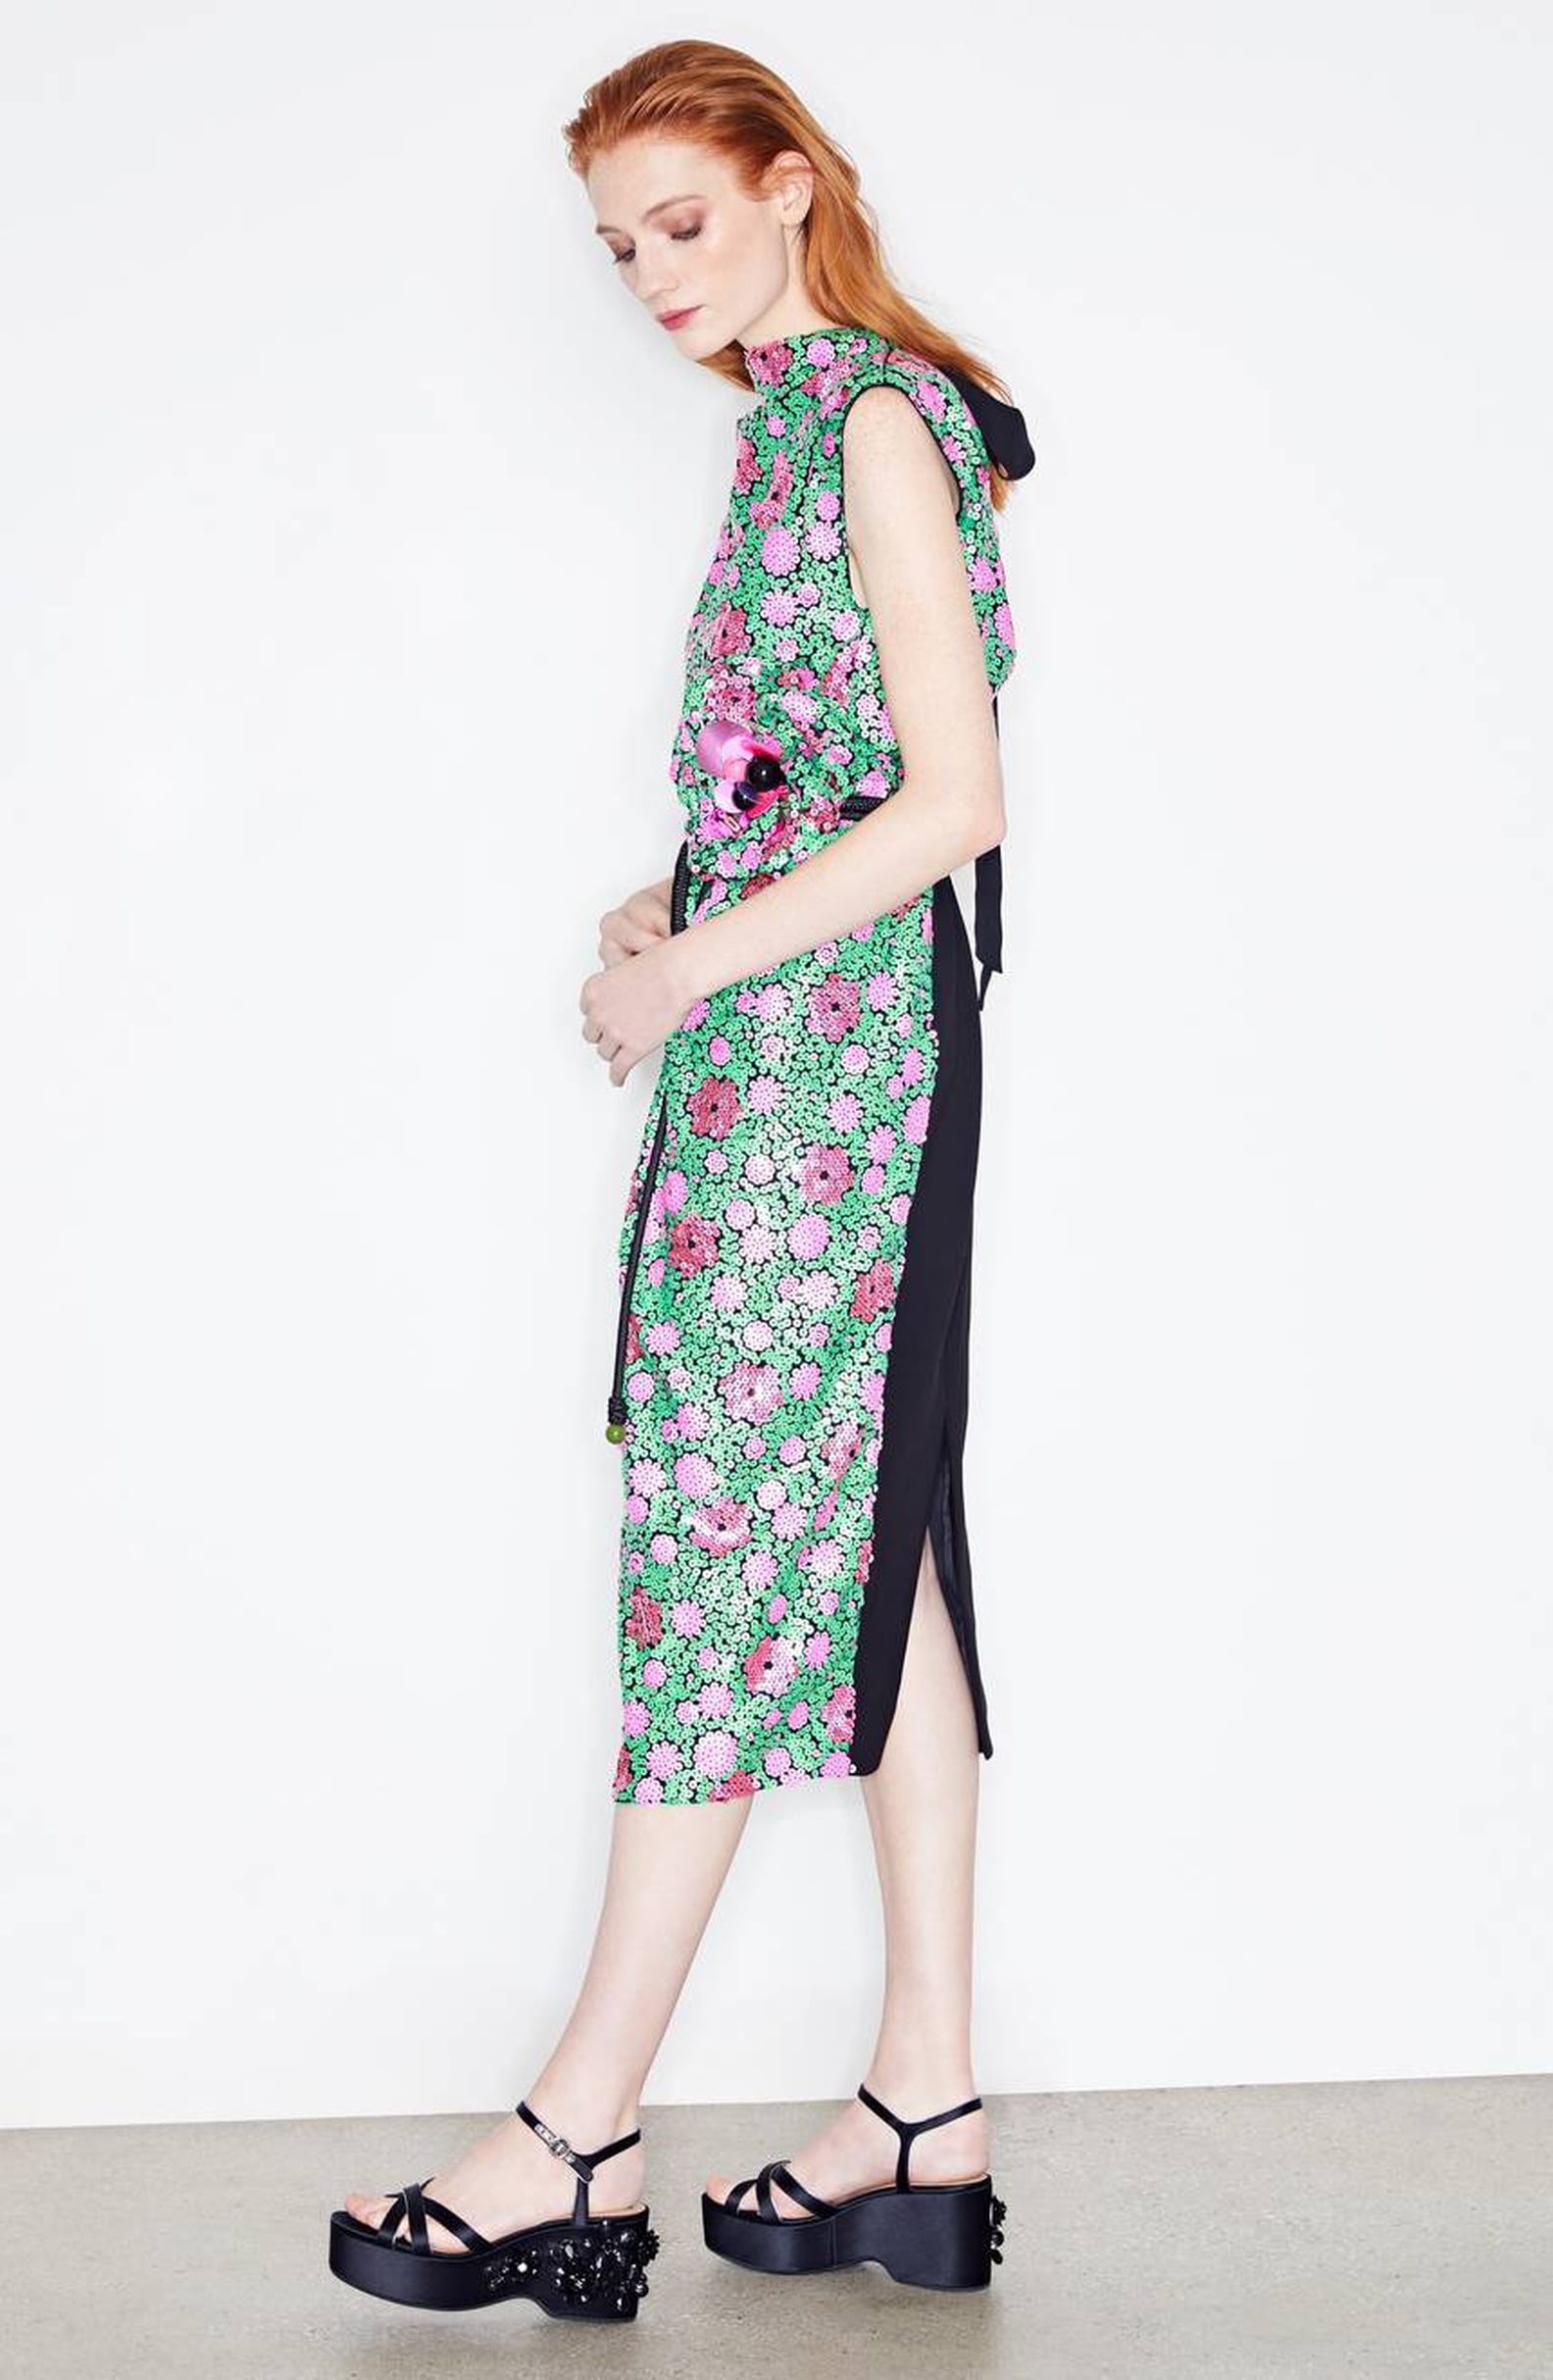 Meghan Markle Green Self Portrait Dress | POPSUGAR Fashion